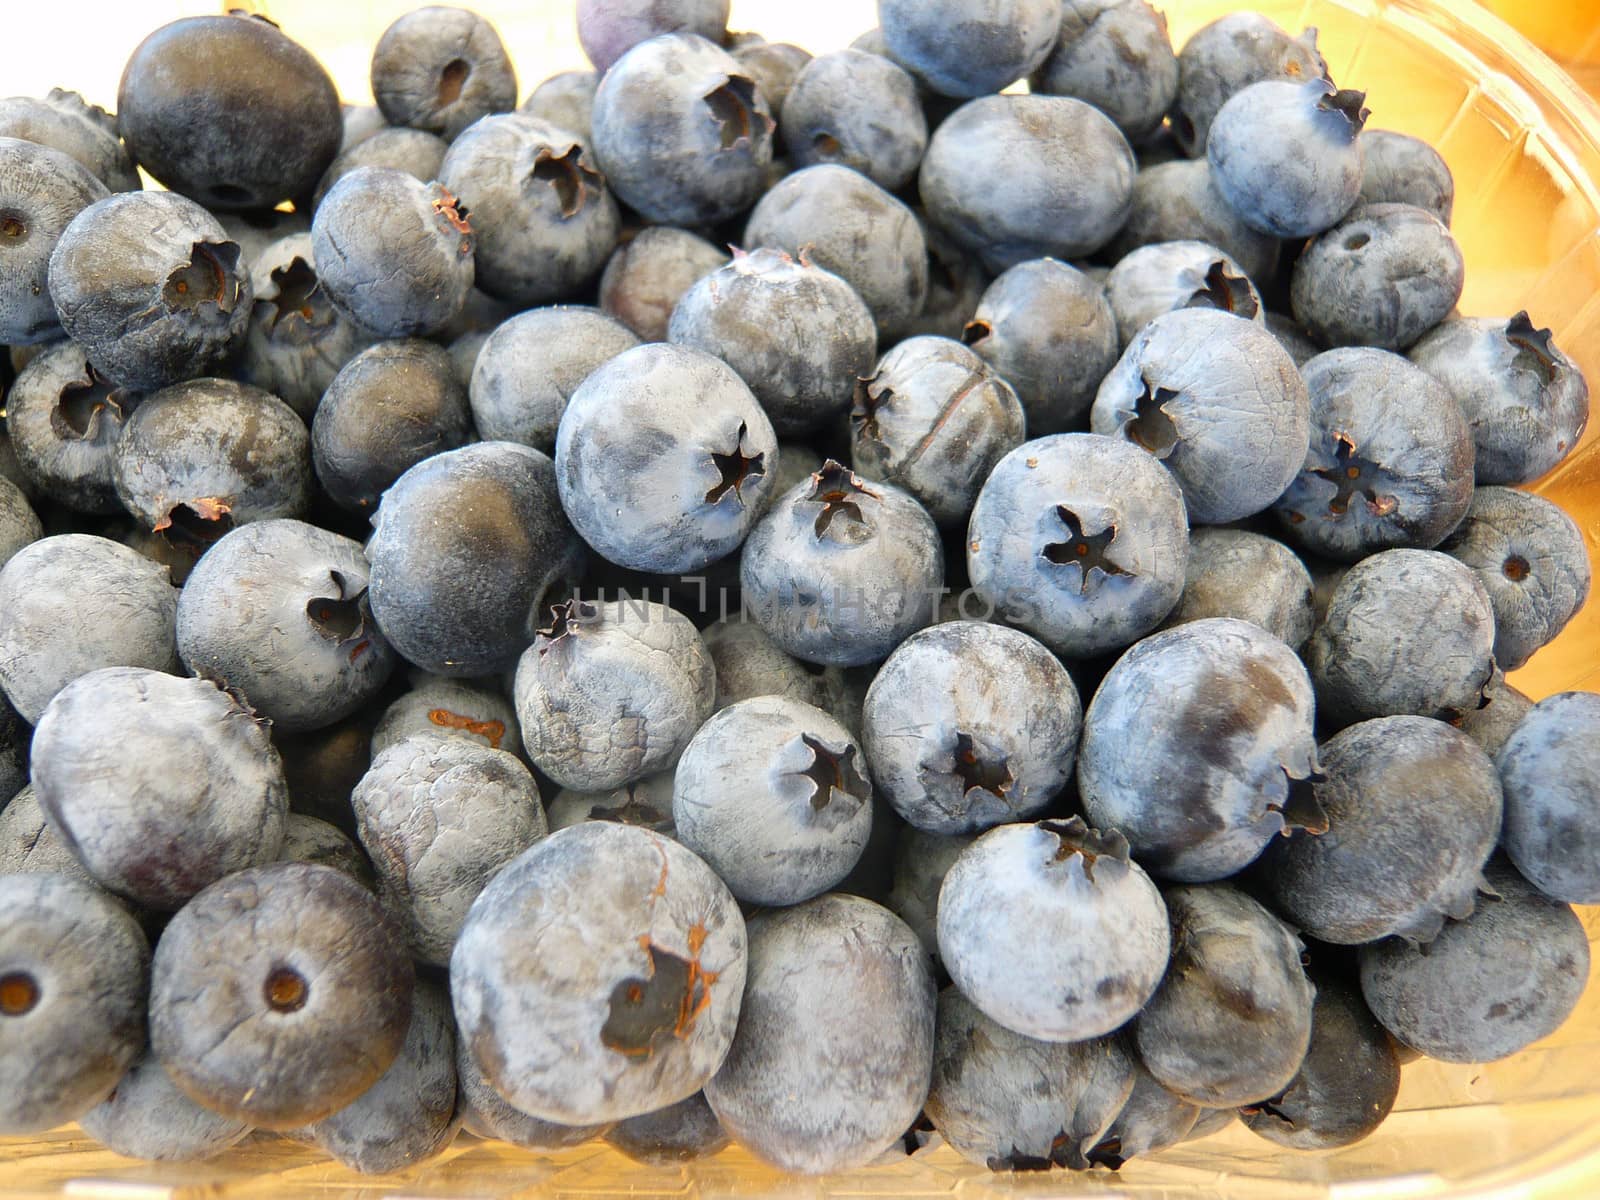 Blueberries by jol66